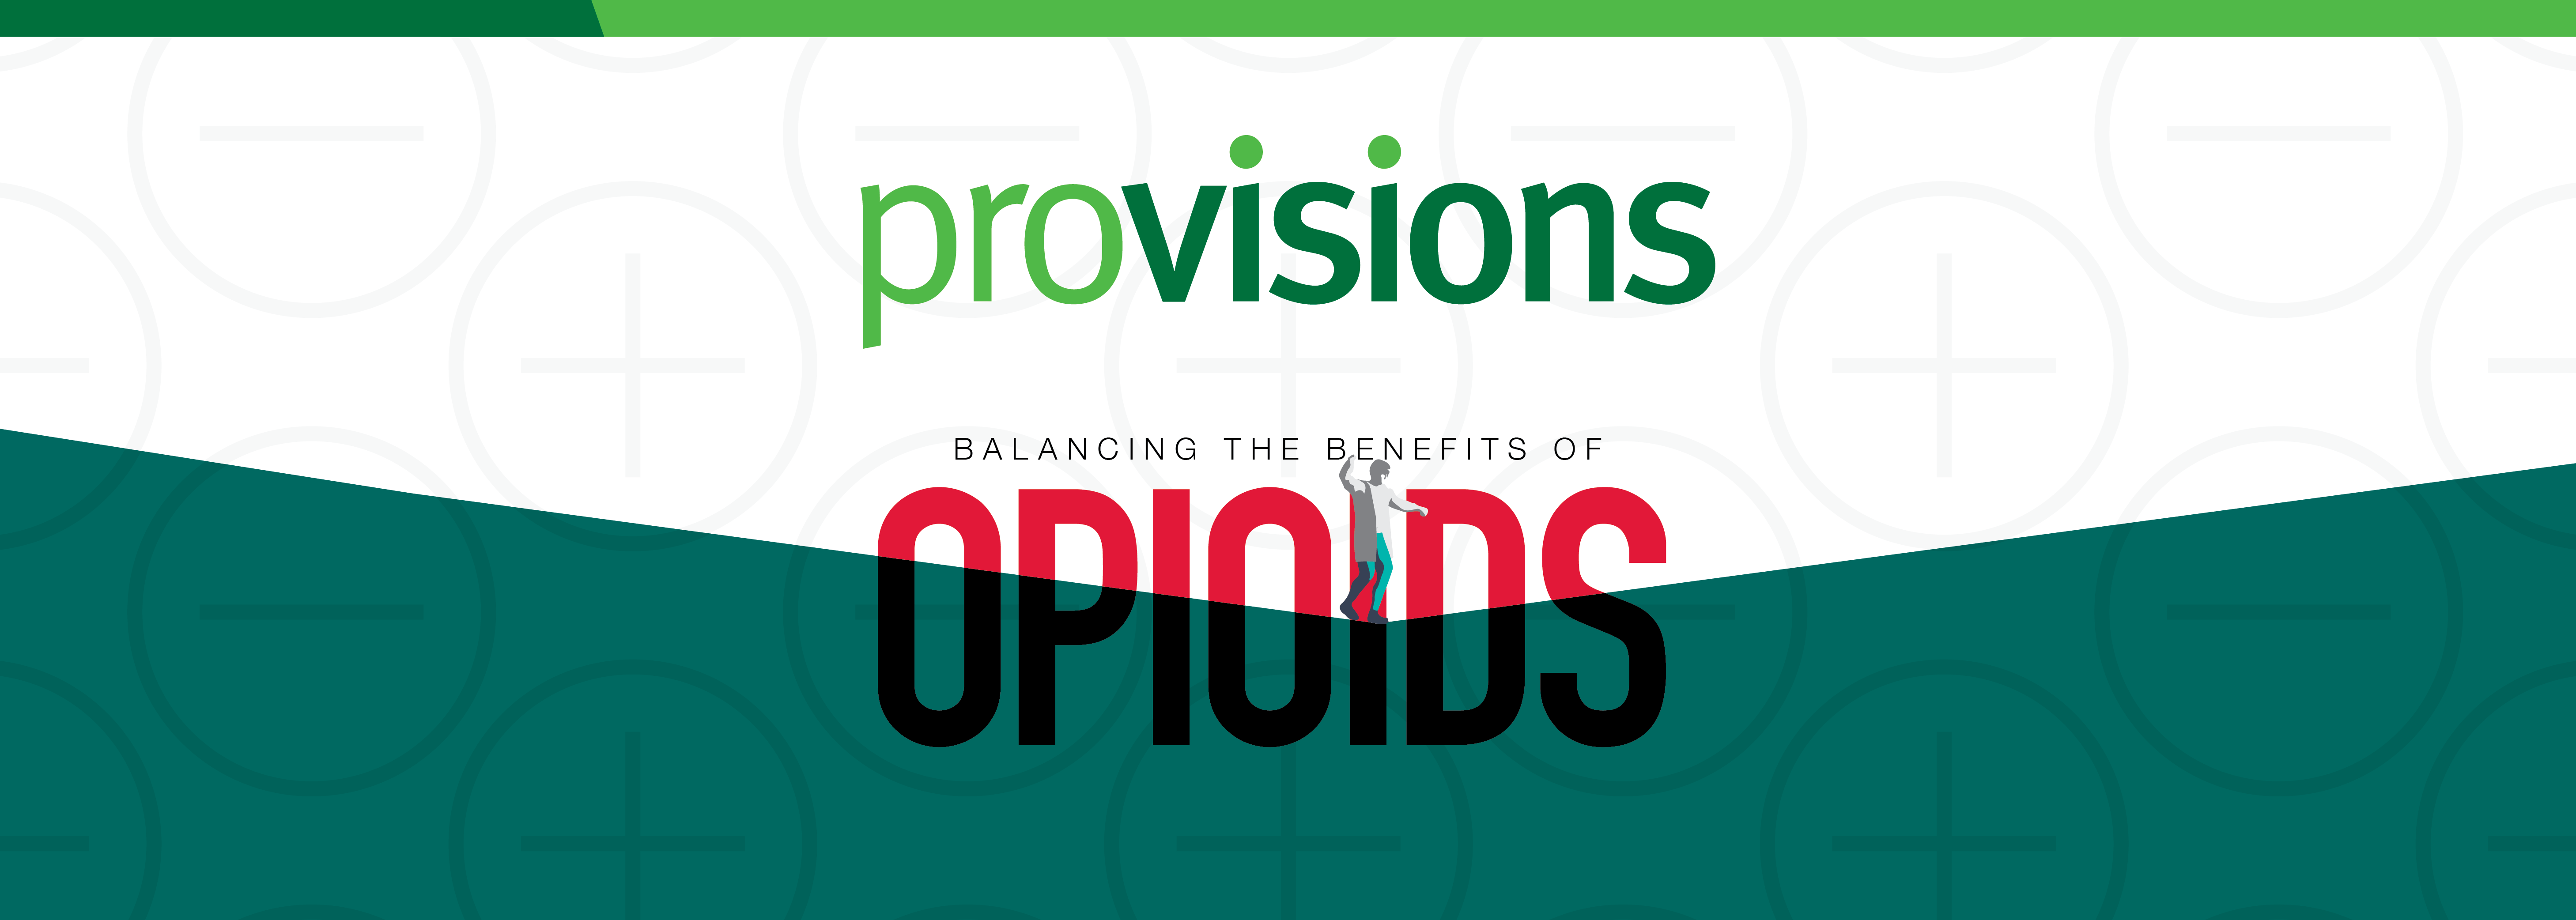 Balancing the Benefits of Opioids